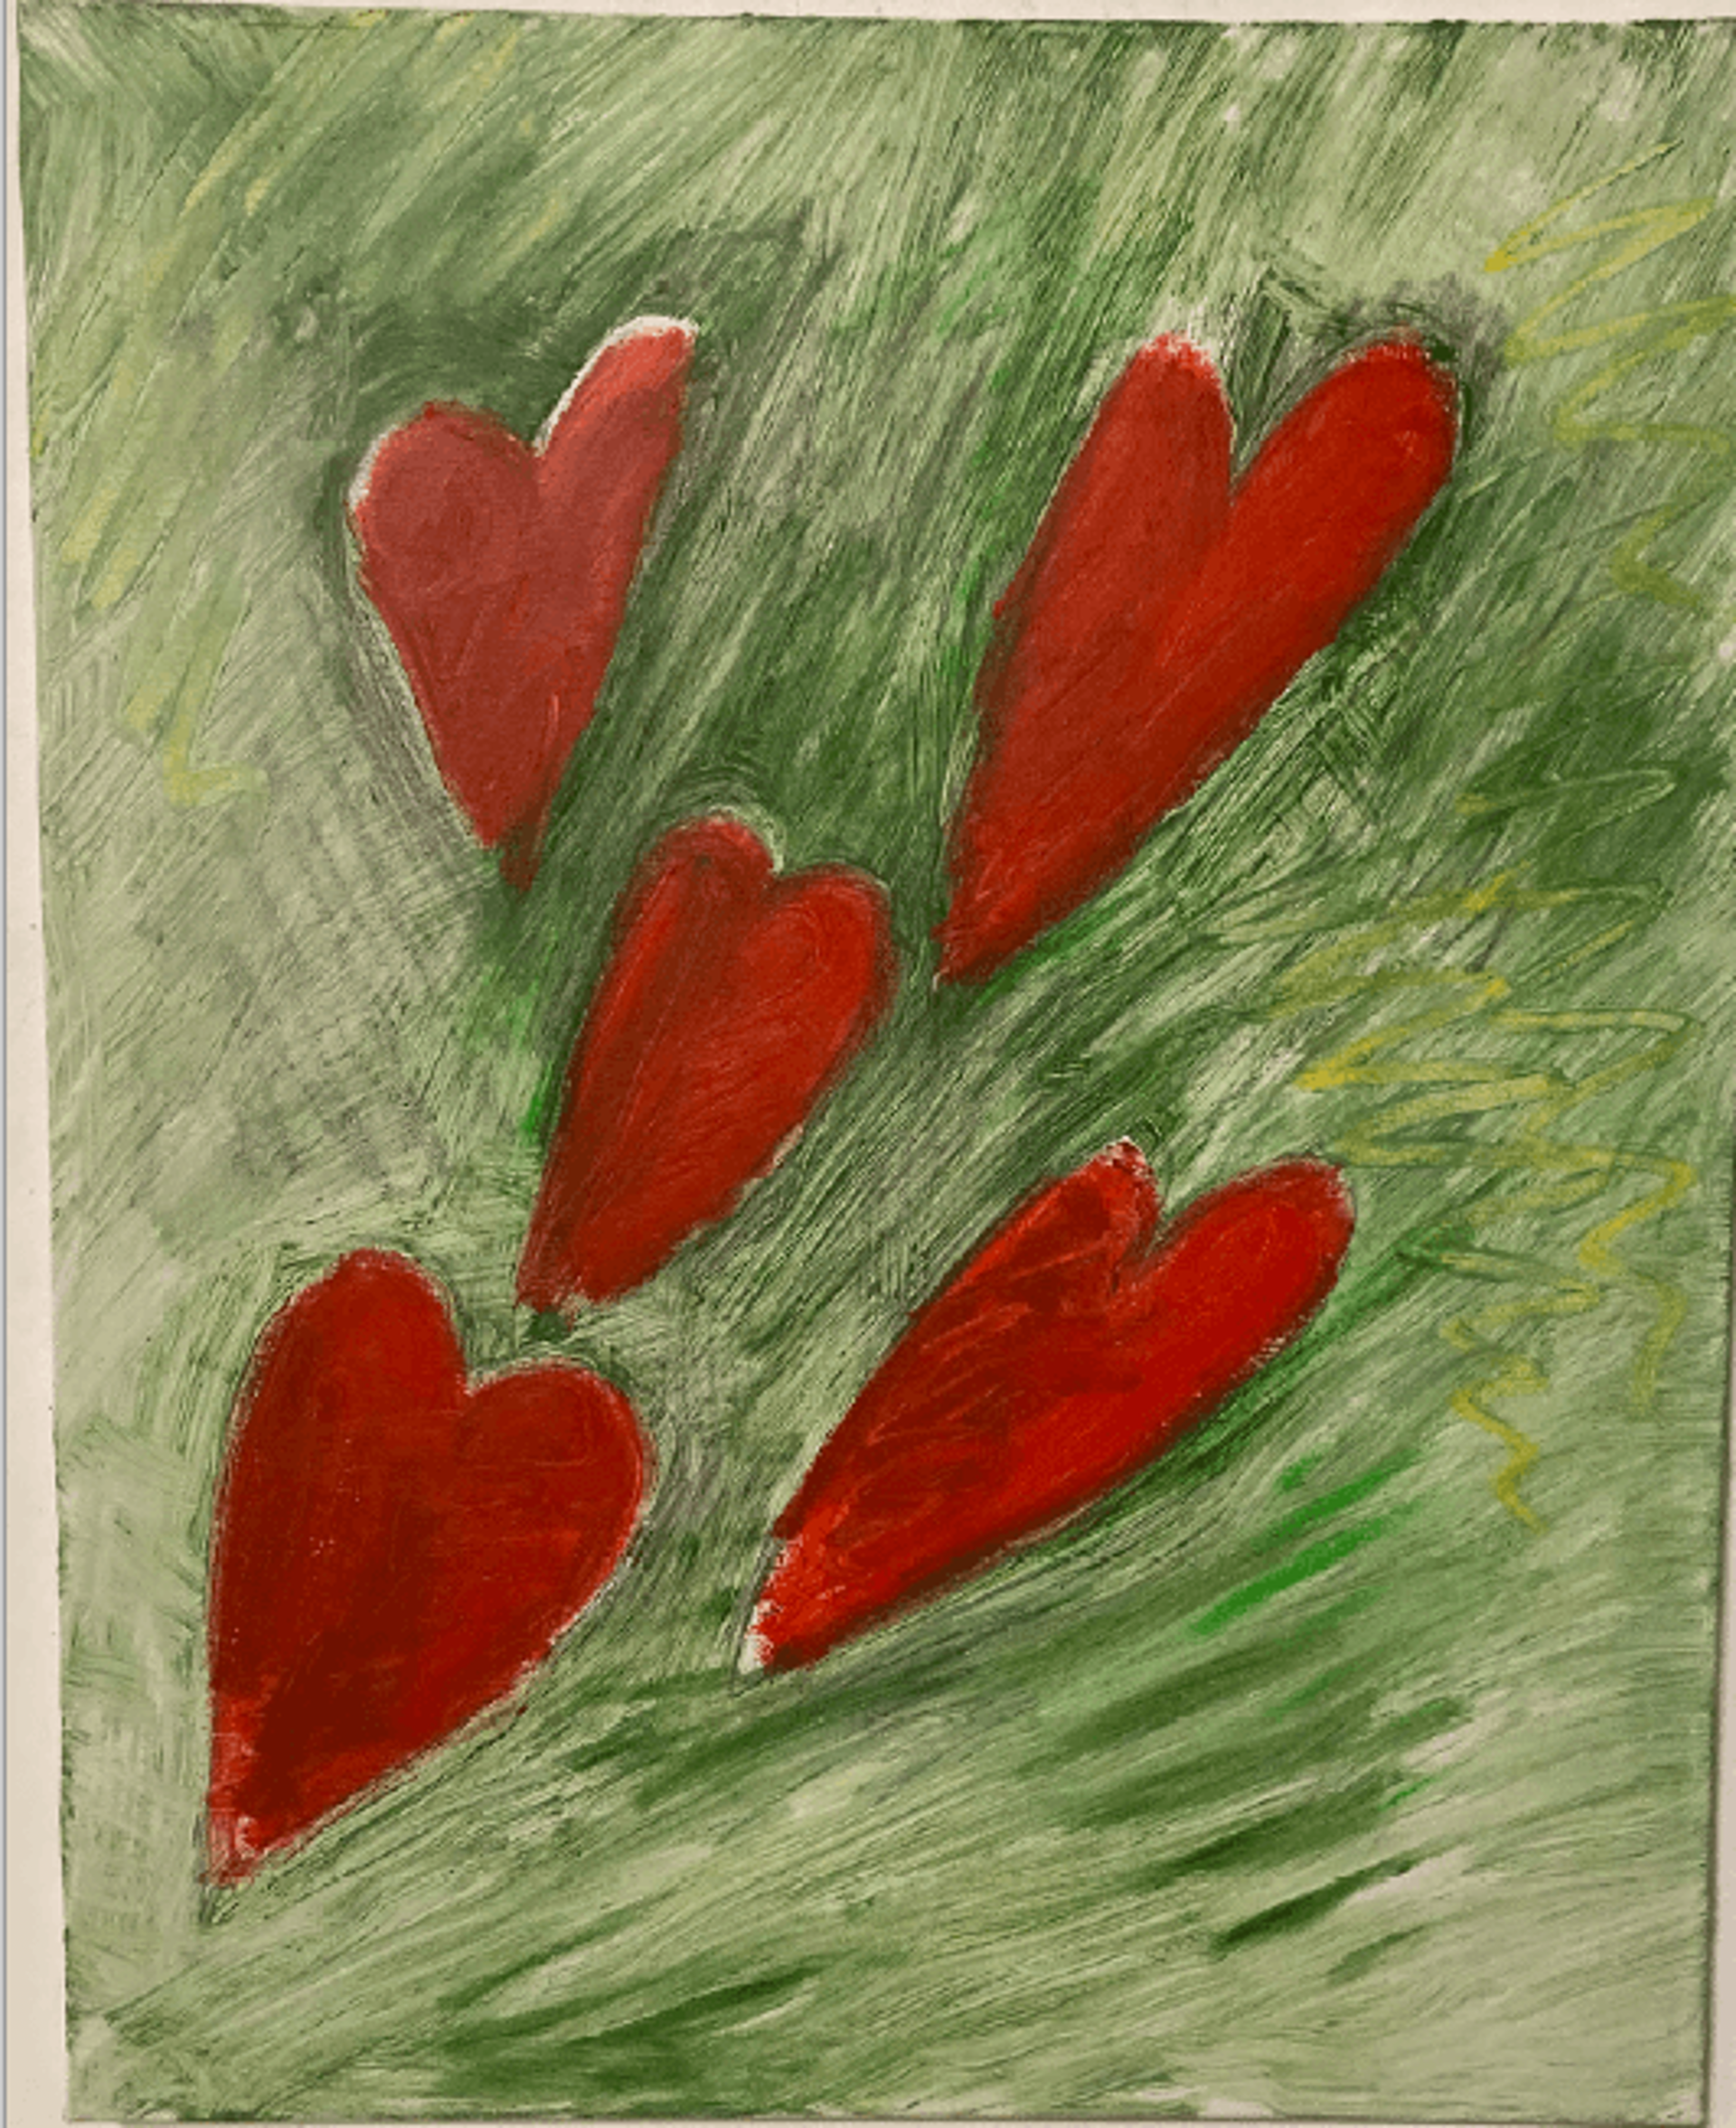 5 of Hearts by Stuart Rapeport